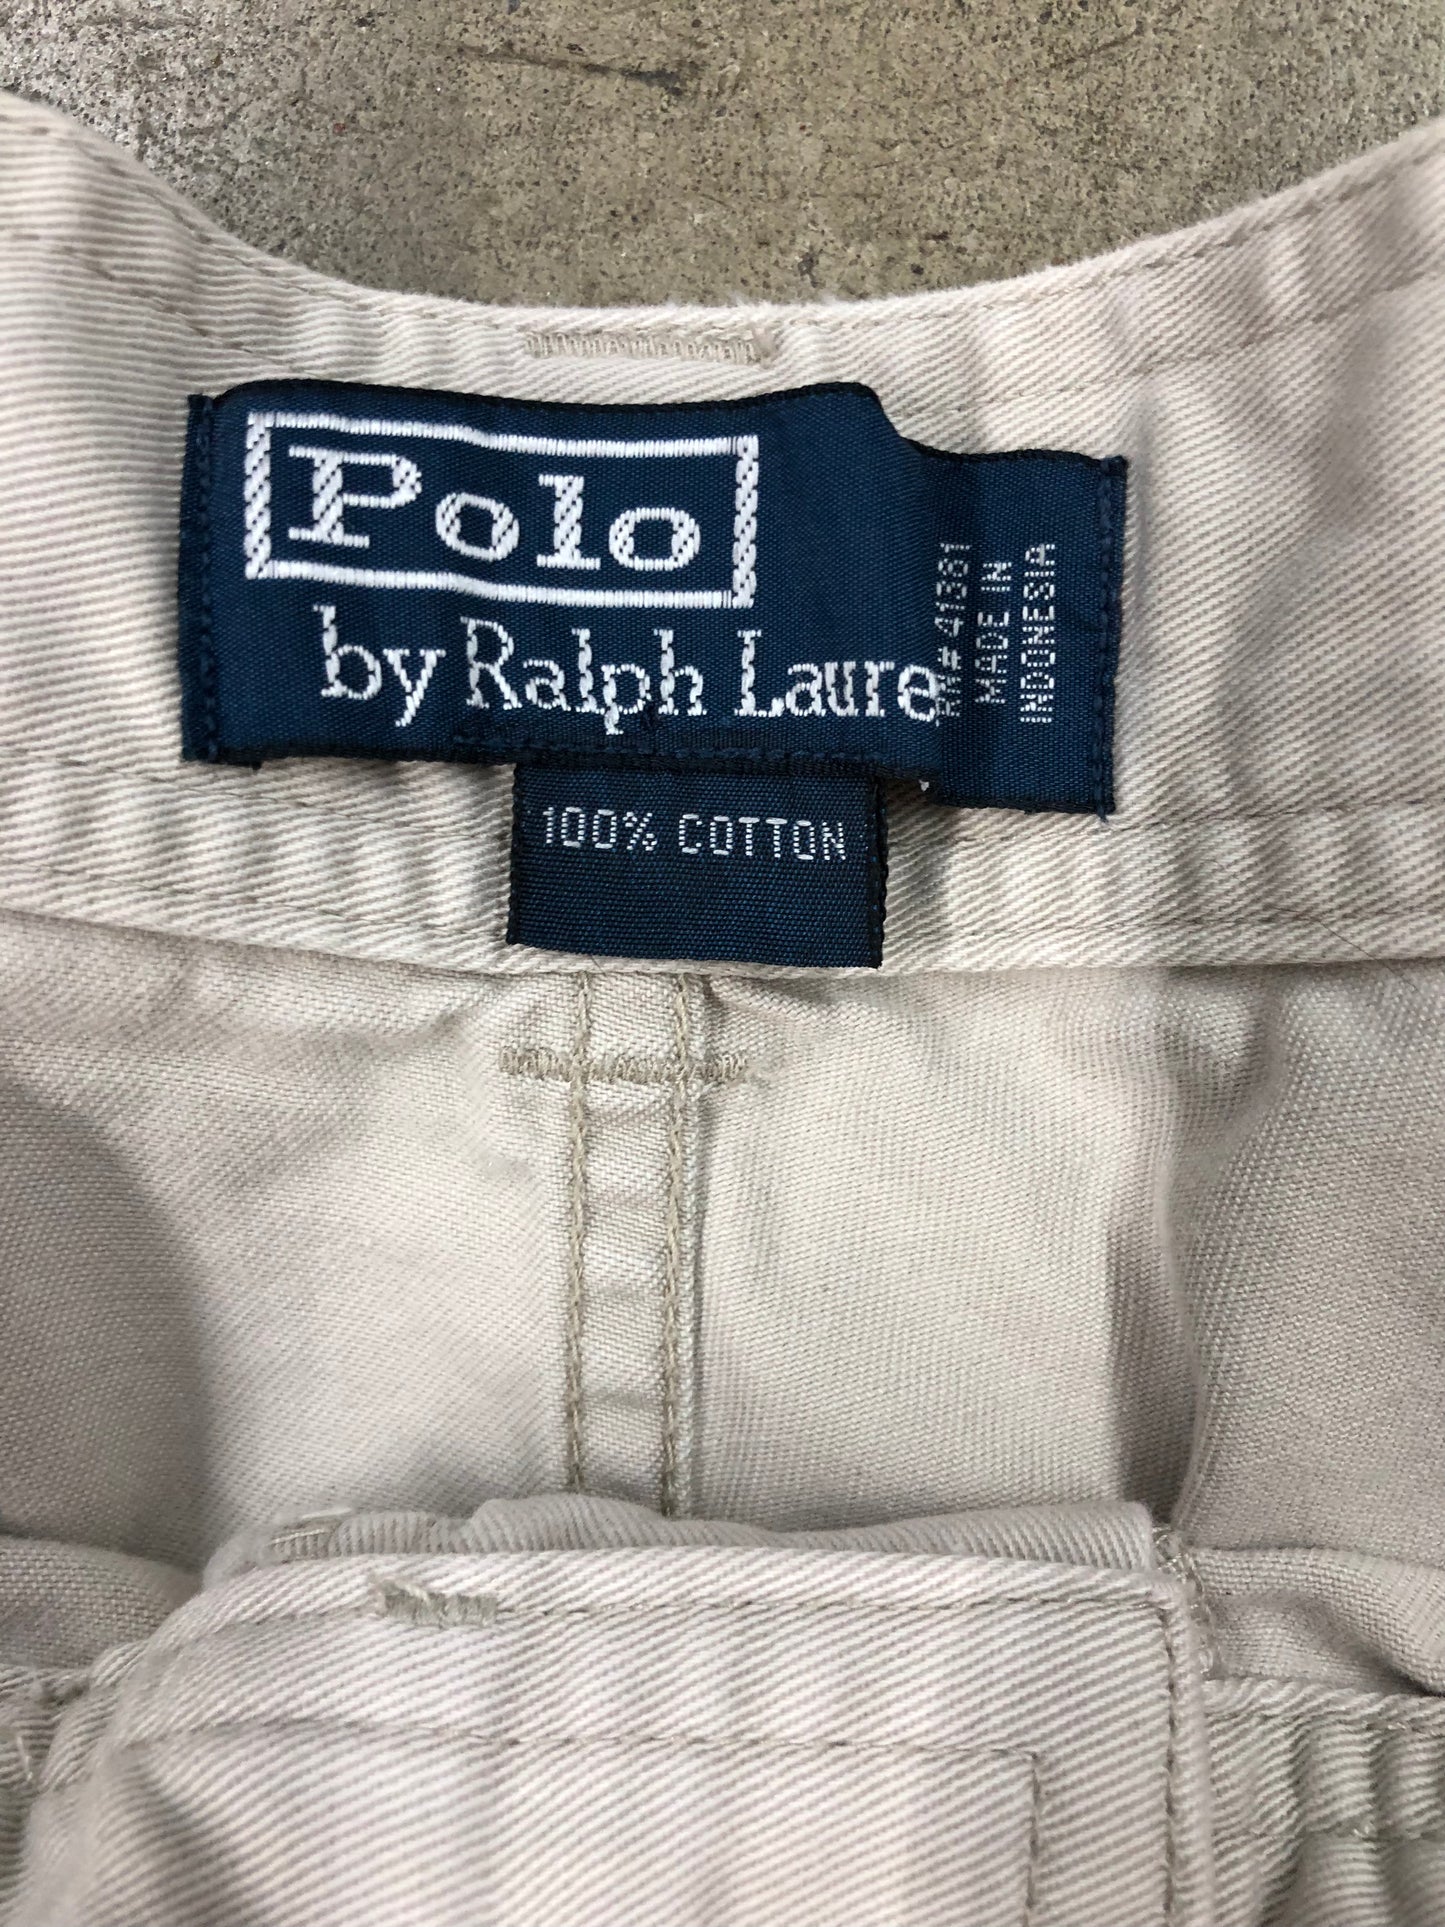 VTG Ralph Lauren Classic Polo Chino Shorts Sz 36x11